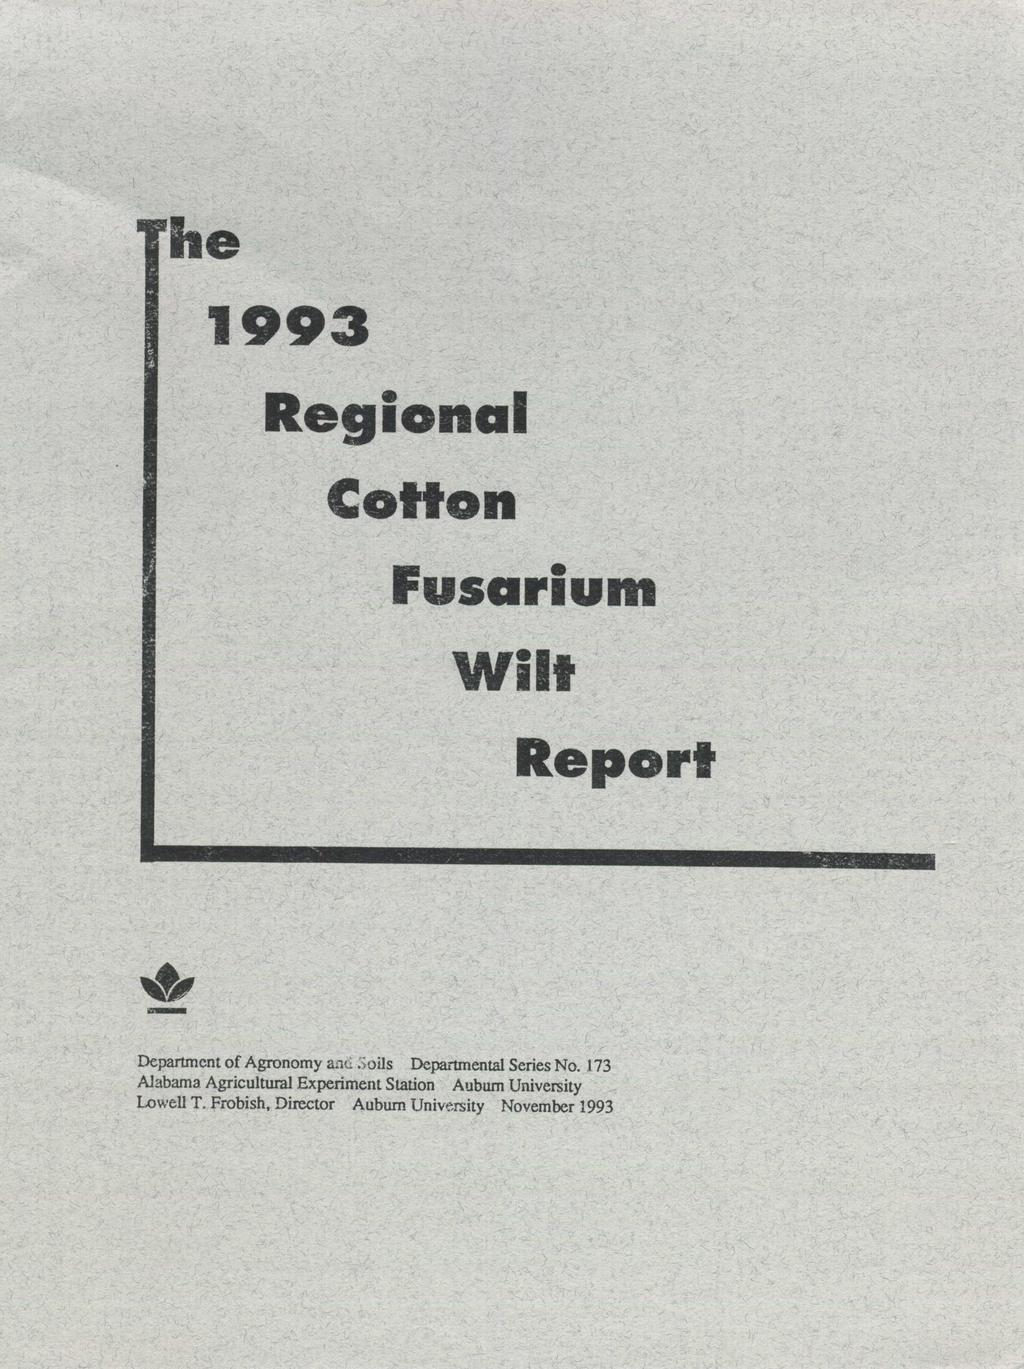 he 1993 Regional Cotton Fusarium Wilt Report is _11-J~b -~ I Ib _,C~g~gq~glsble1llM1IM Department of Agronomy a.oils -.